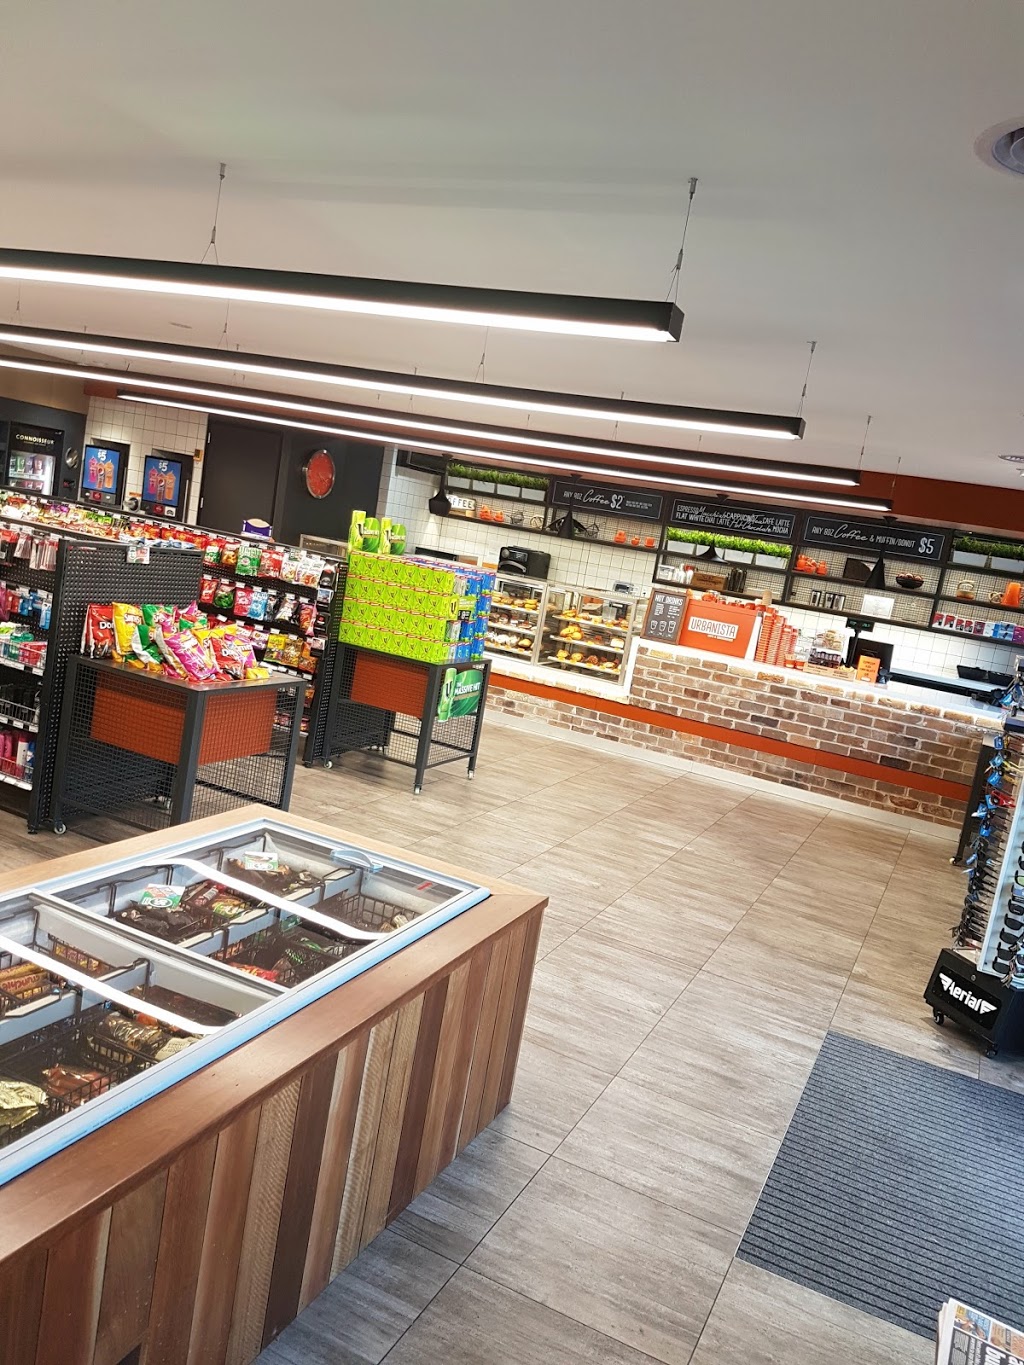 BP Urbanista Cafe & Convenience | gas station | 228-232 Edgar St, Condell Park NSW 2200, Australia | 0297093363 OR +61 2 9709 3363